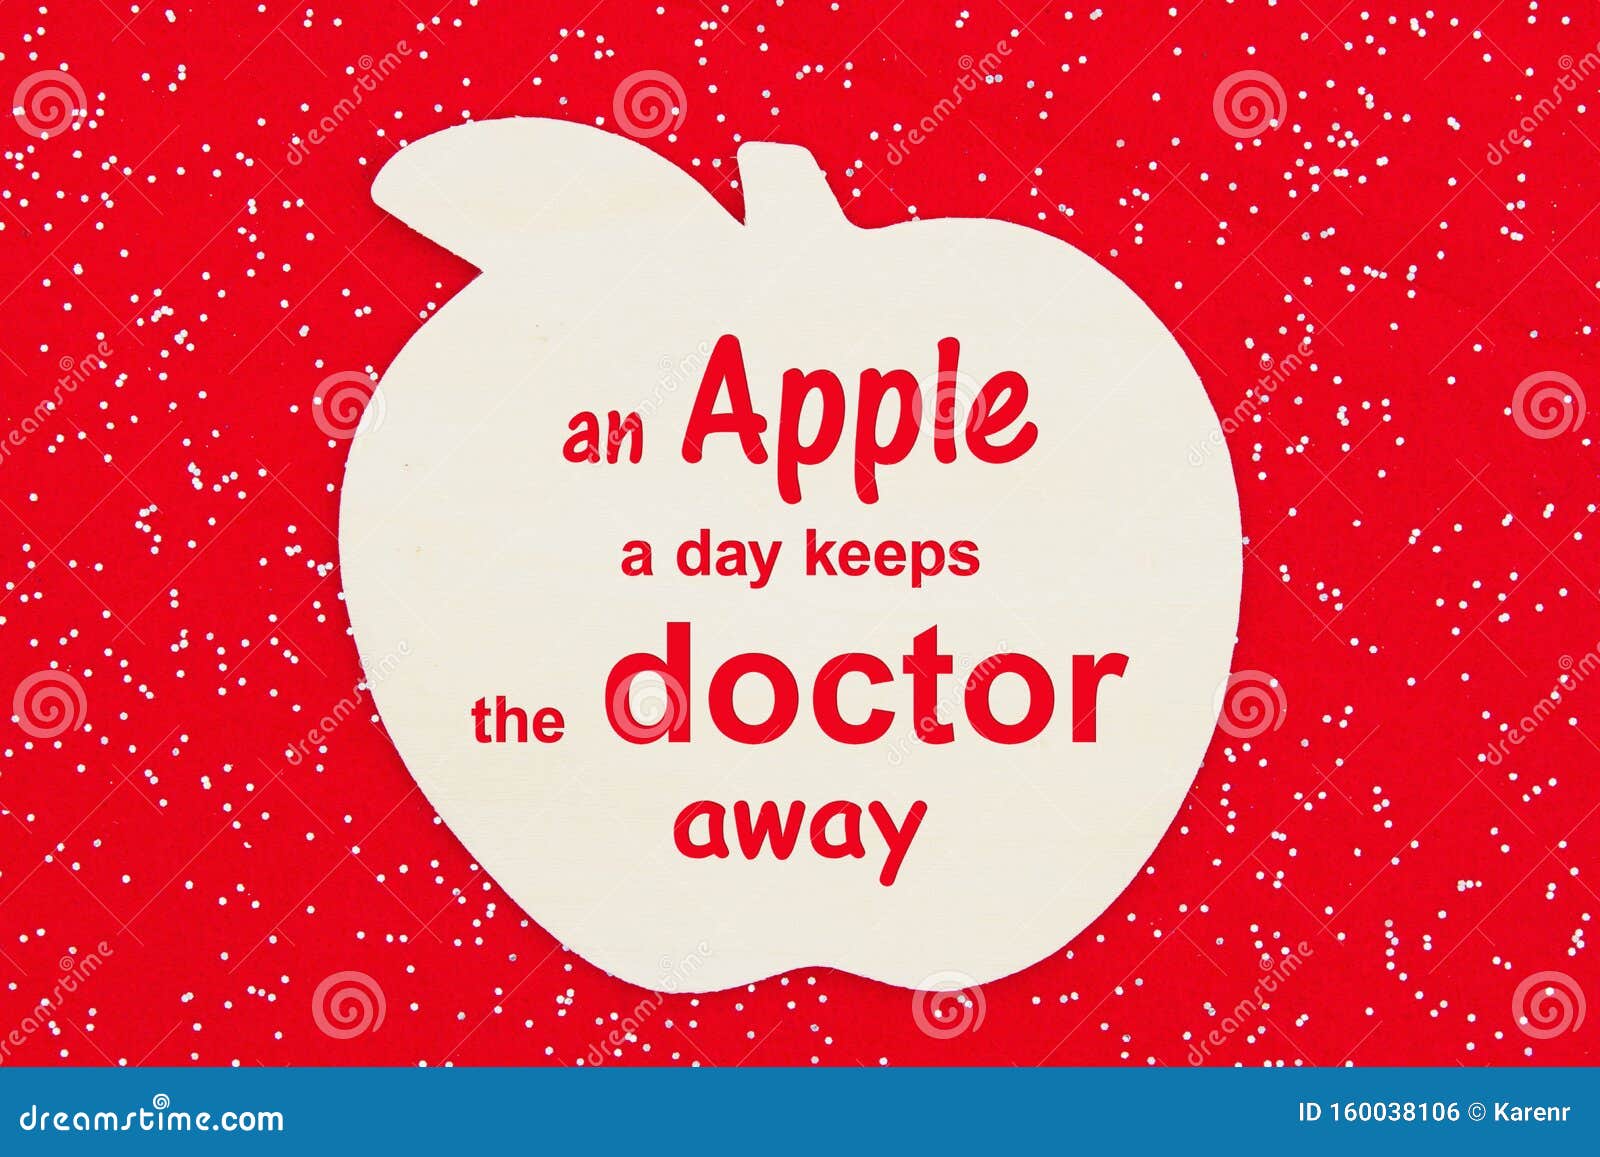 An apple a day keeps the away. An Apple a Day keeps the Doctor away. An Apple a Day keeps. One Apple a Day keeps the Doctor away картинка. An Apple a Day keeps the Doctor away идиома.